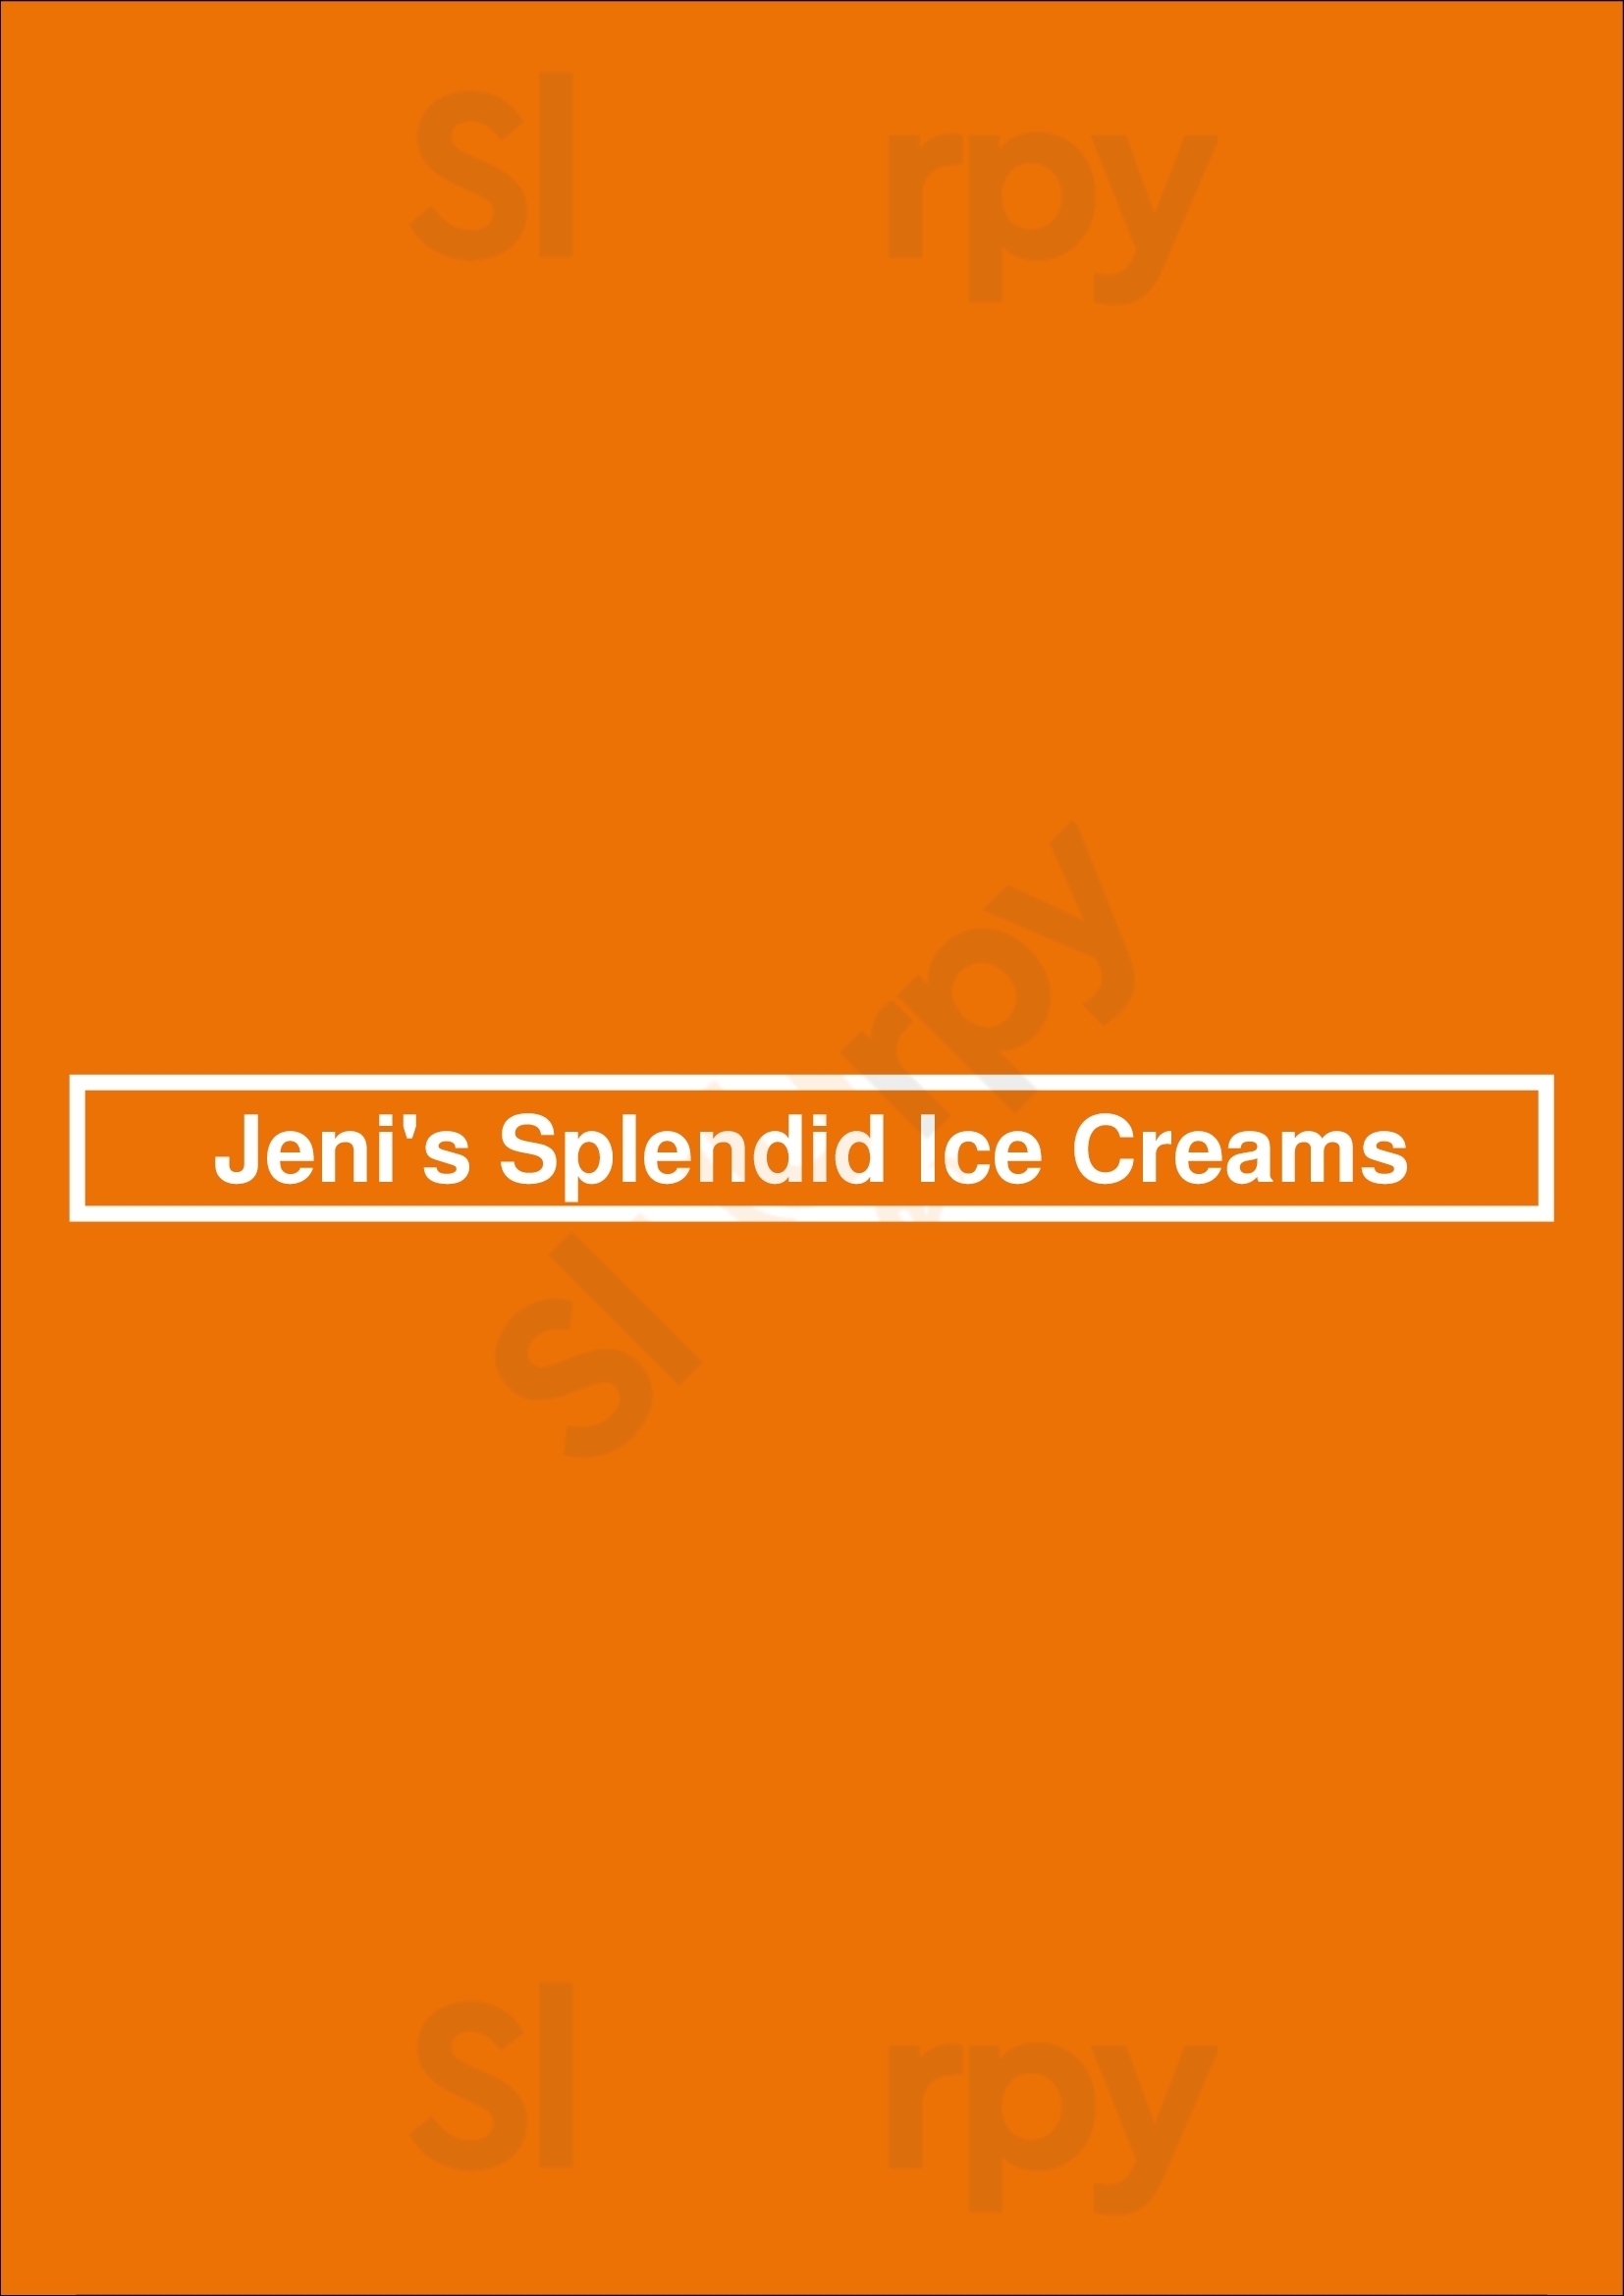 Jeni's Splendid Ice Creams Chicago Menu - 1